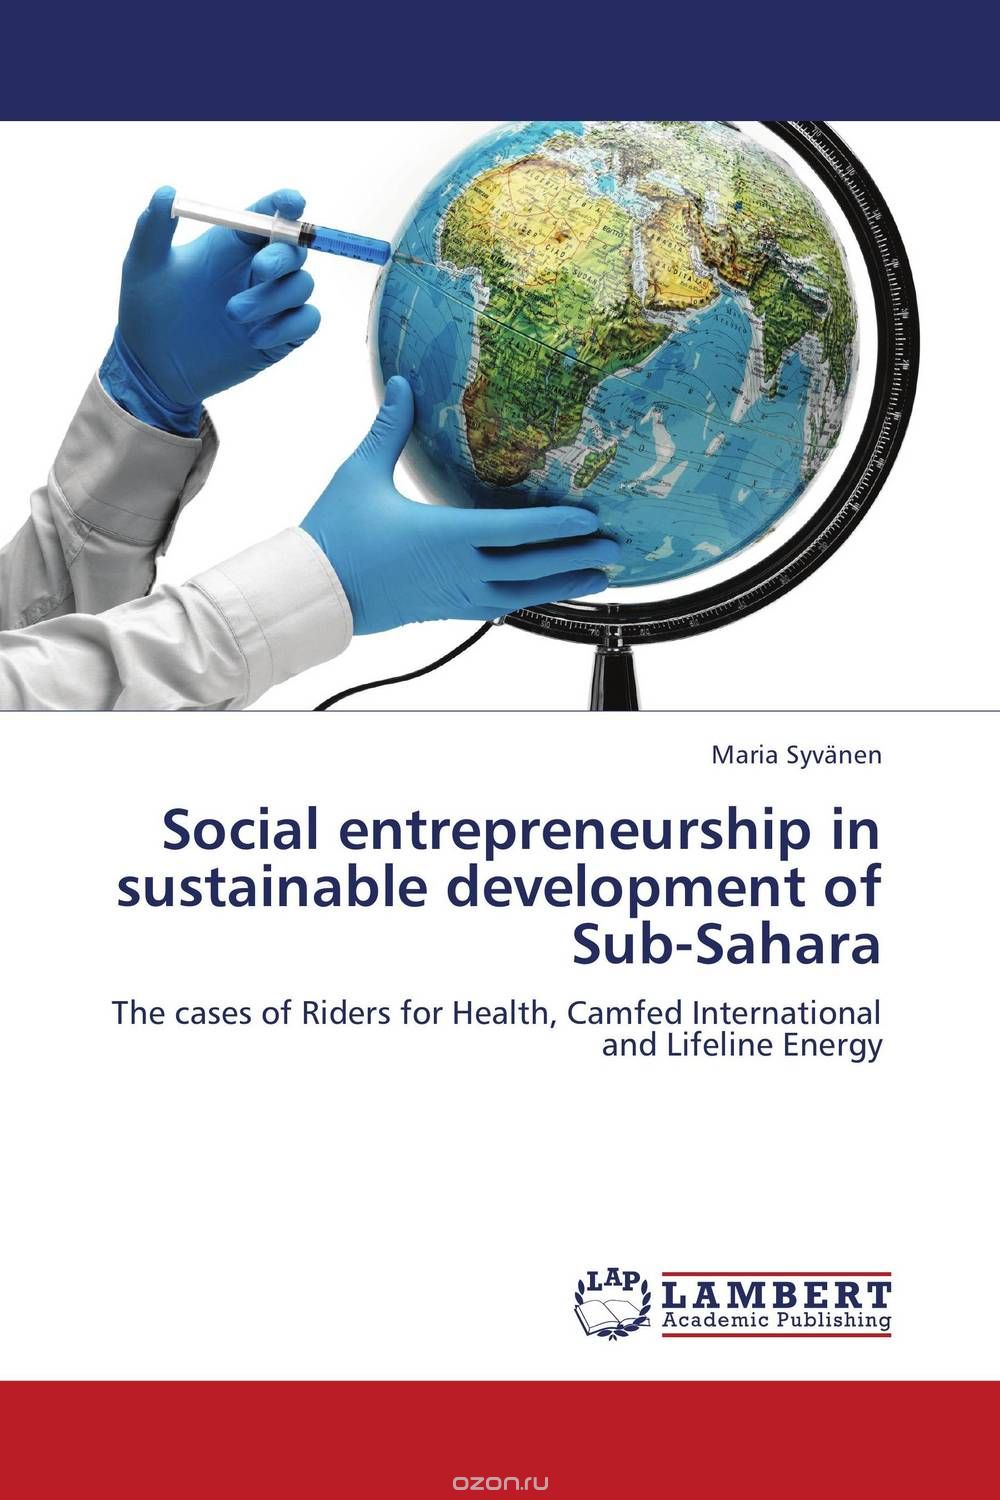 Скачать книгу "Social entrepreneurship in sustainable development of Sub-Sahara"